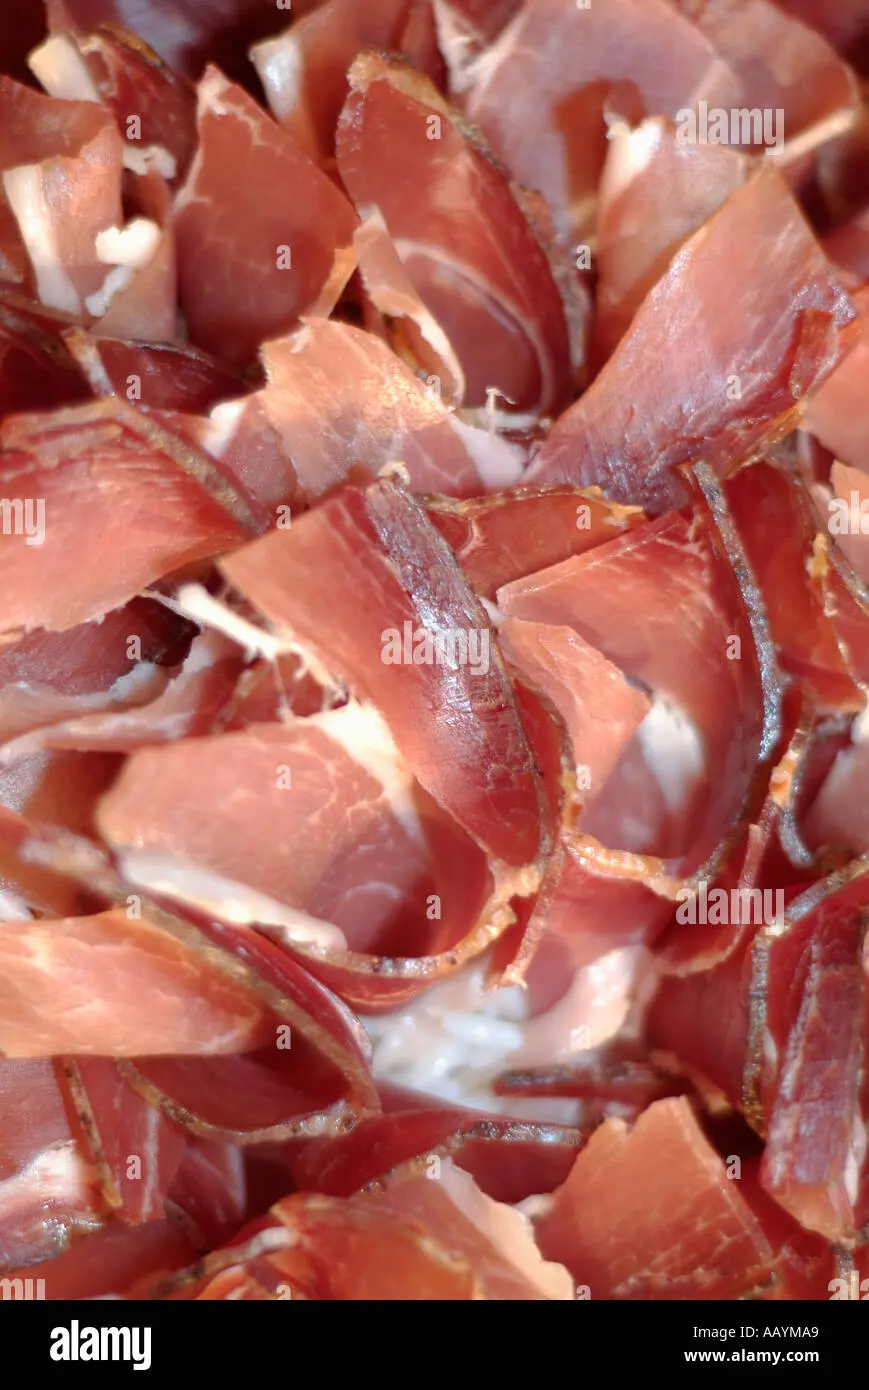 dalmatian smoked ham - What is Dalmatian smoked ham